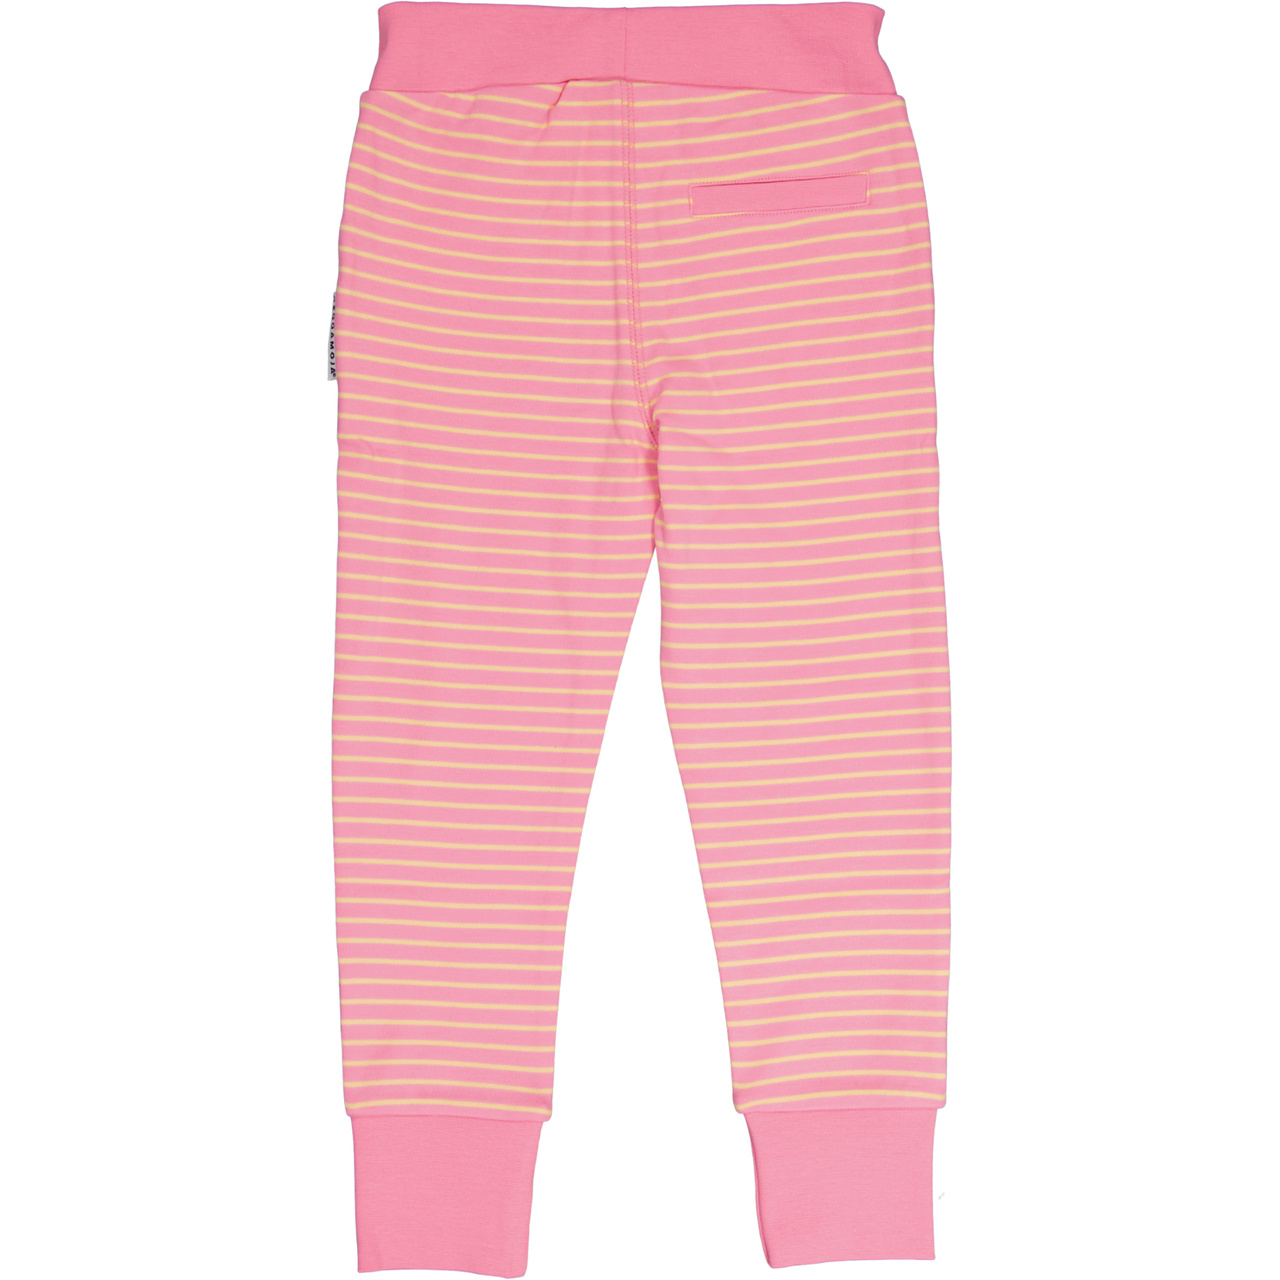 Long pants Pink/yellow  146/152